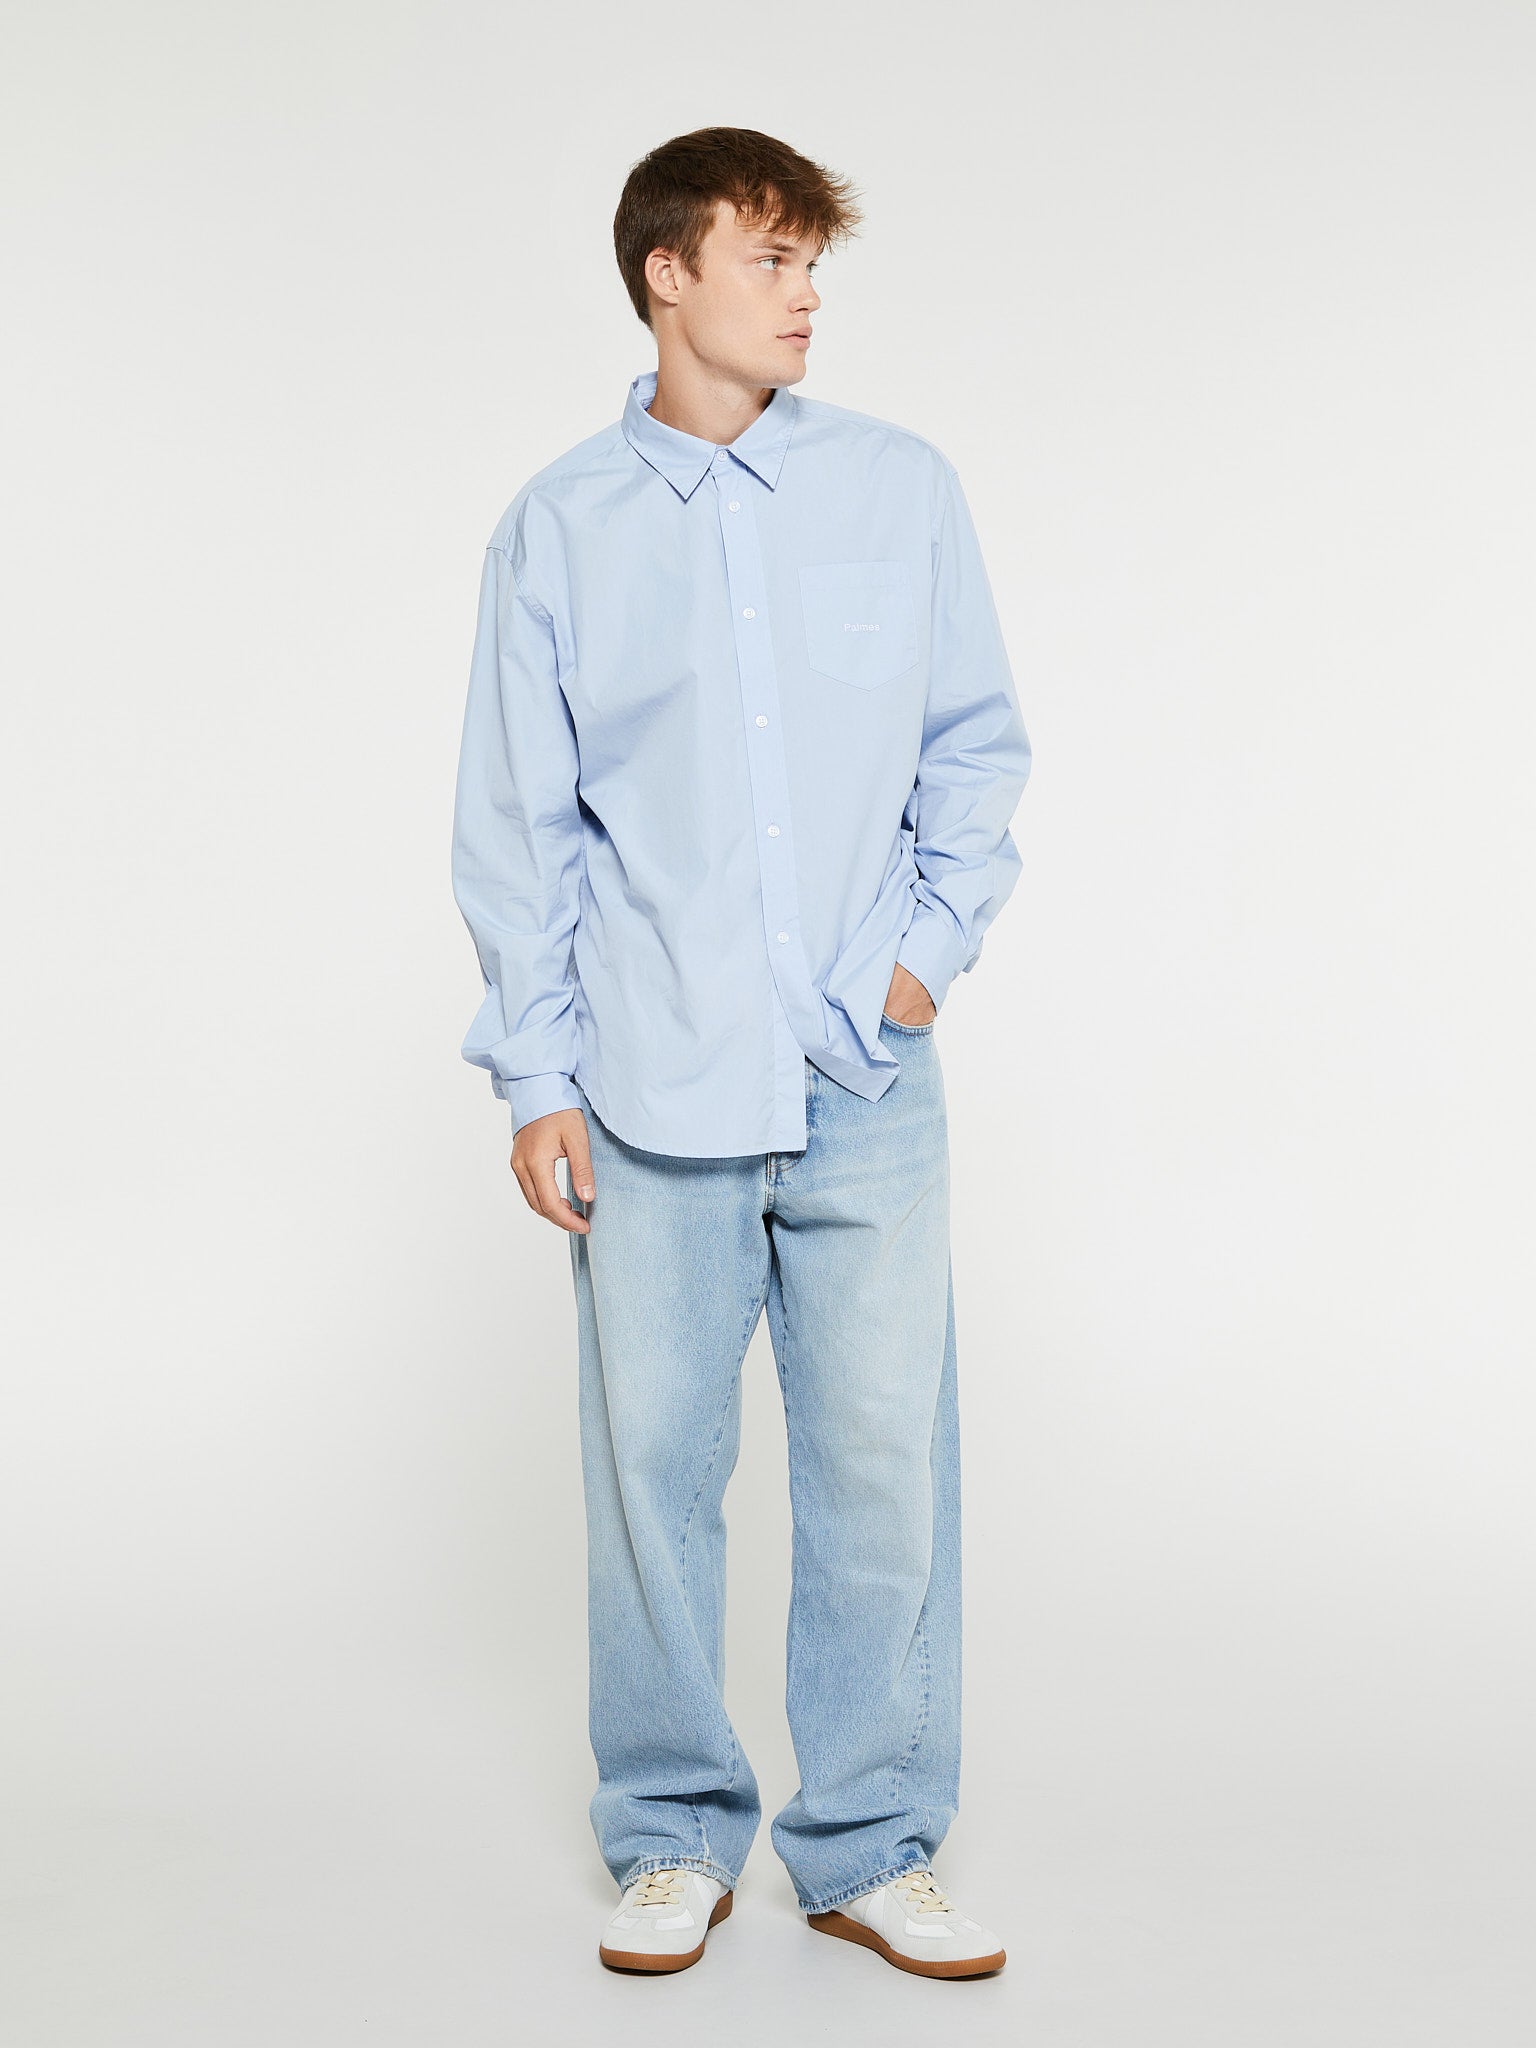 Daryl Long-Sleeved Shirt in Light Blue